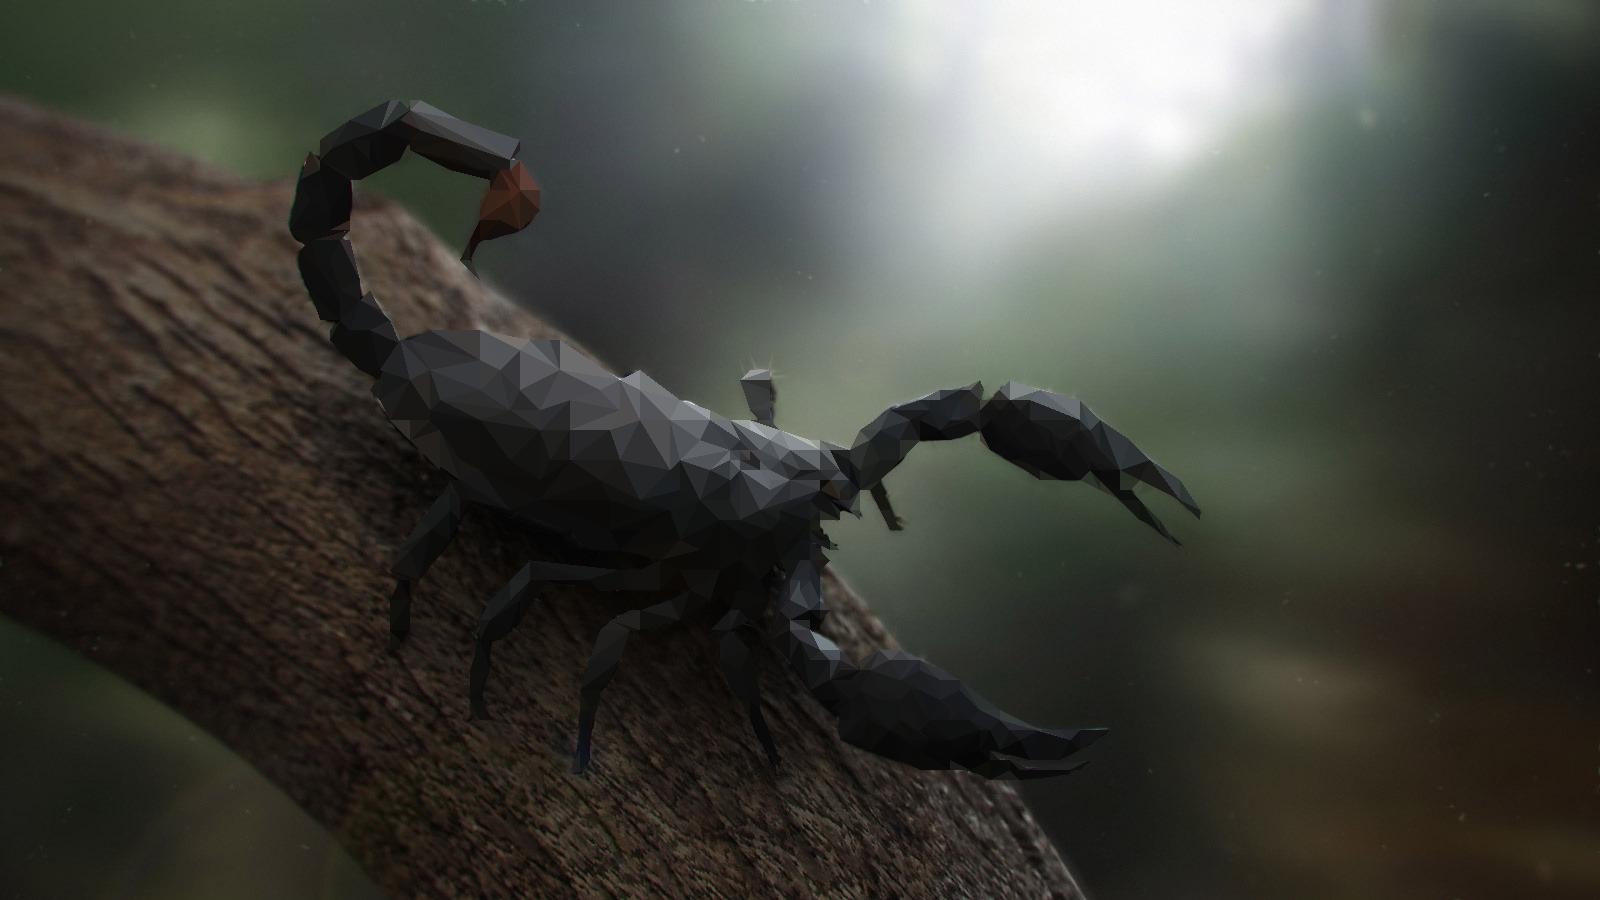 General 1600x900 nature animals trees digital art scorpions low poly branch wood depth of field black arachnid